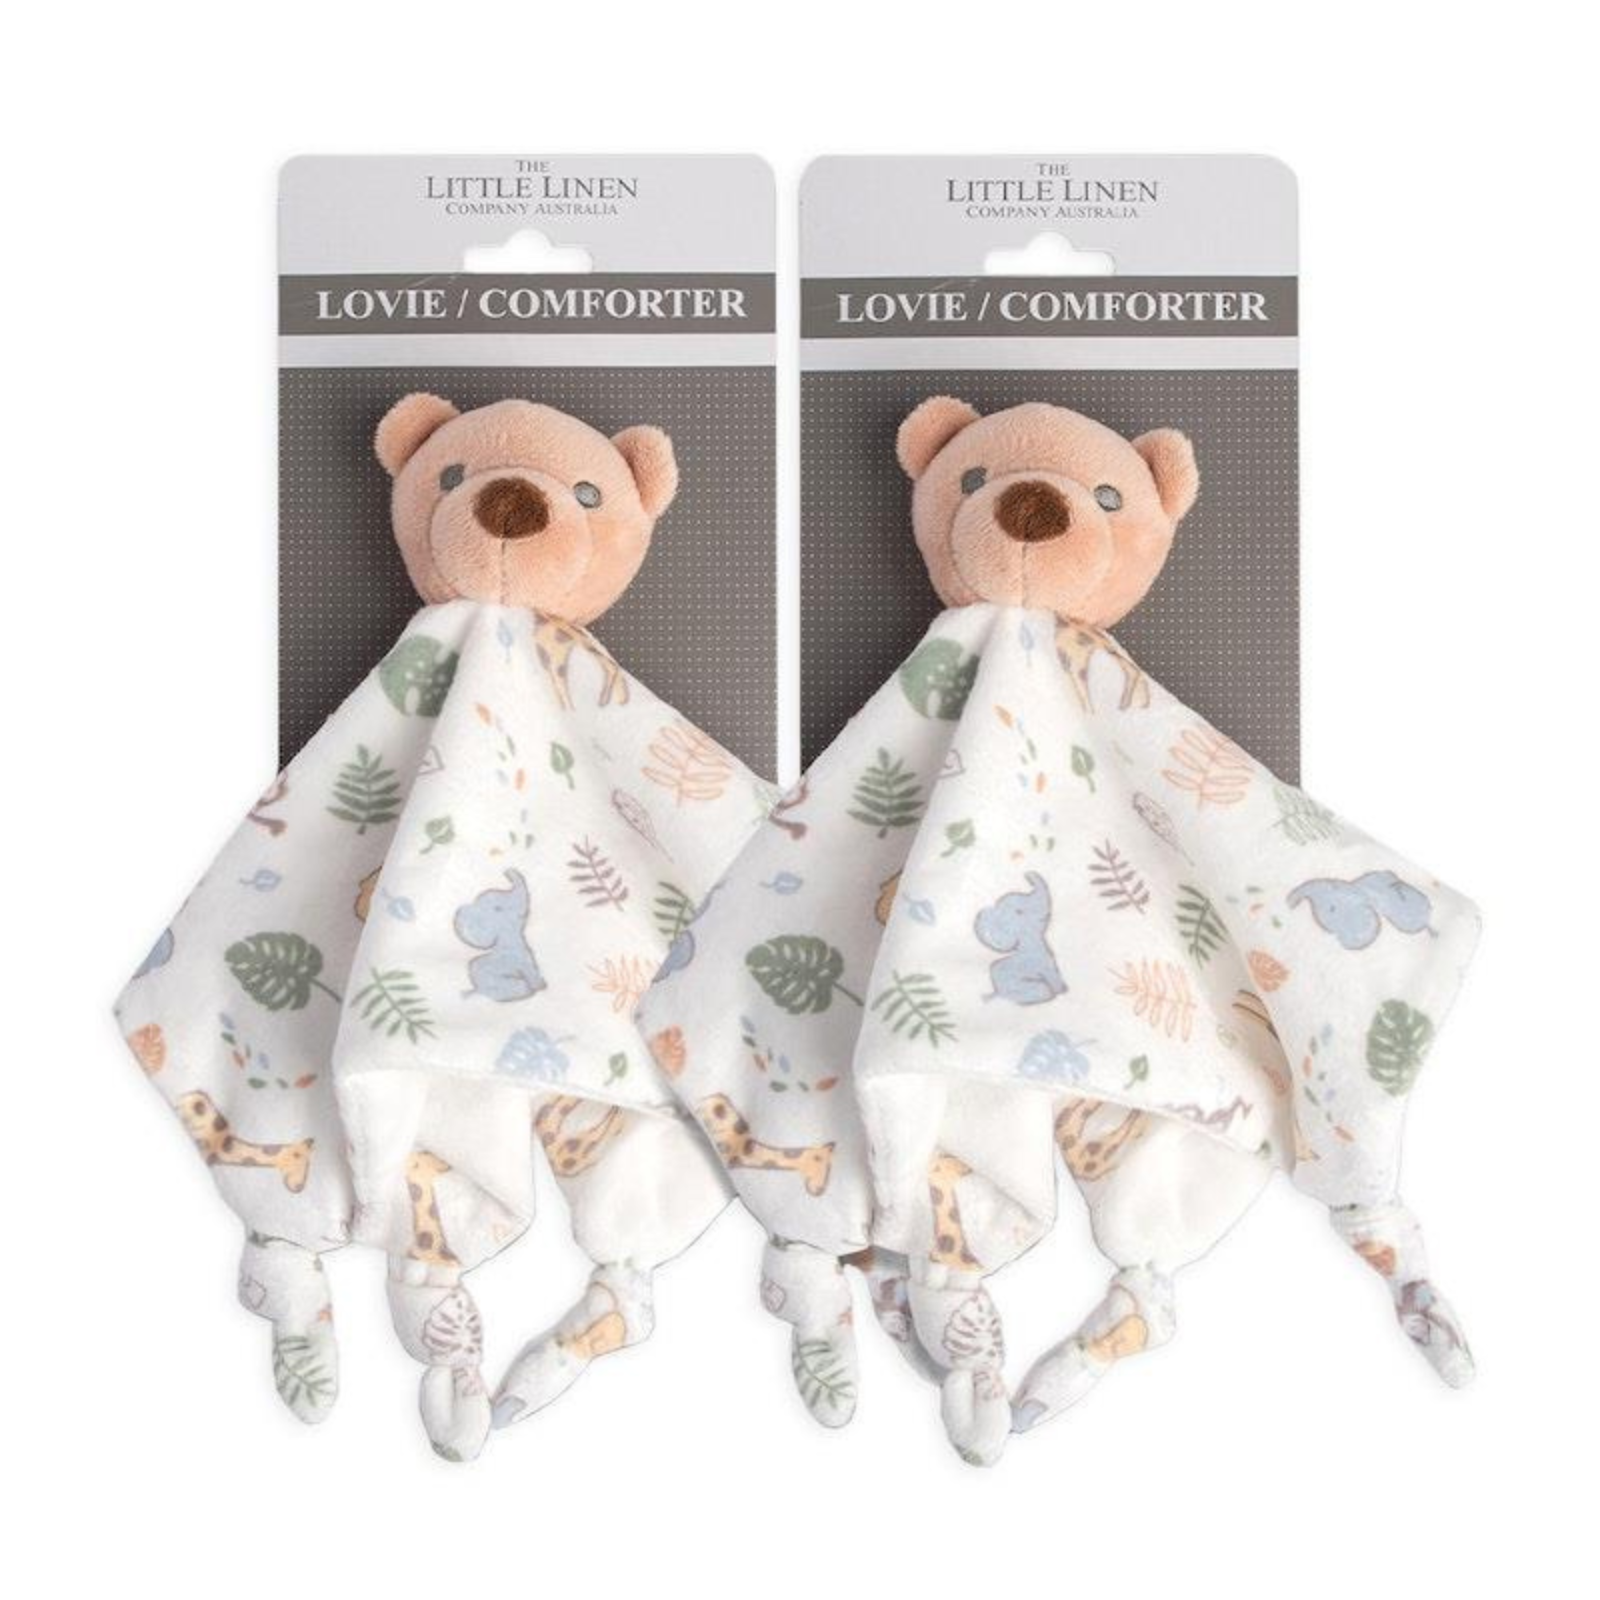 Primary image for The Little Linen Company Lovie/Comforter Safari Bear 2-pack